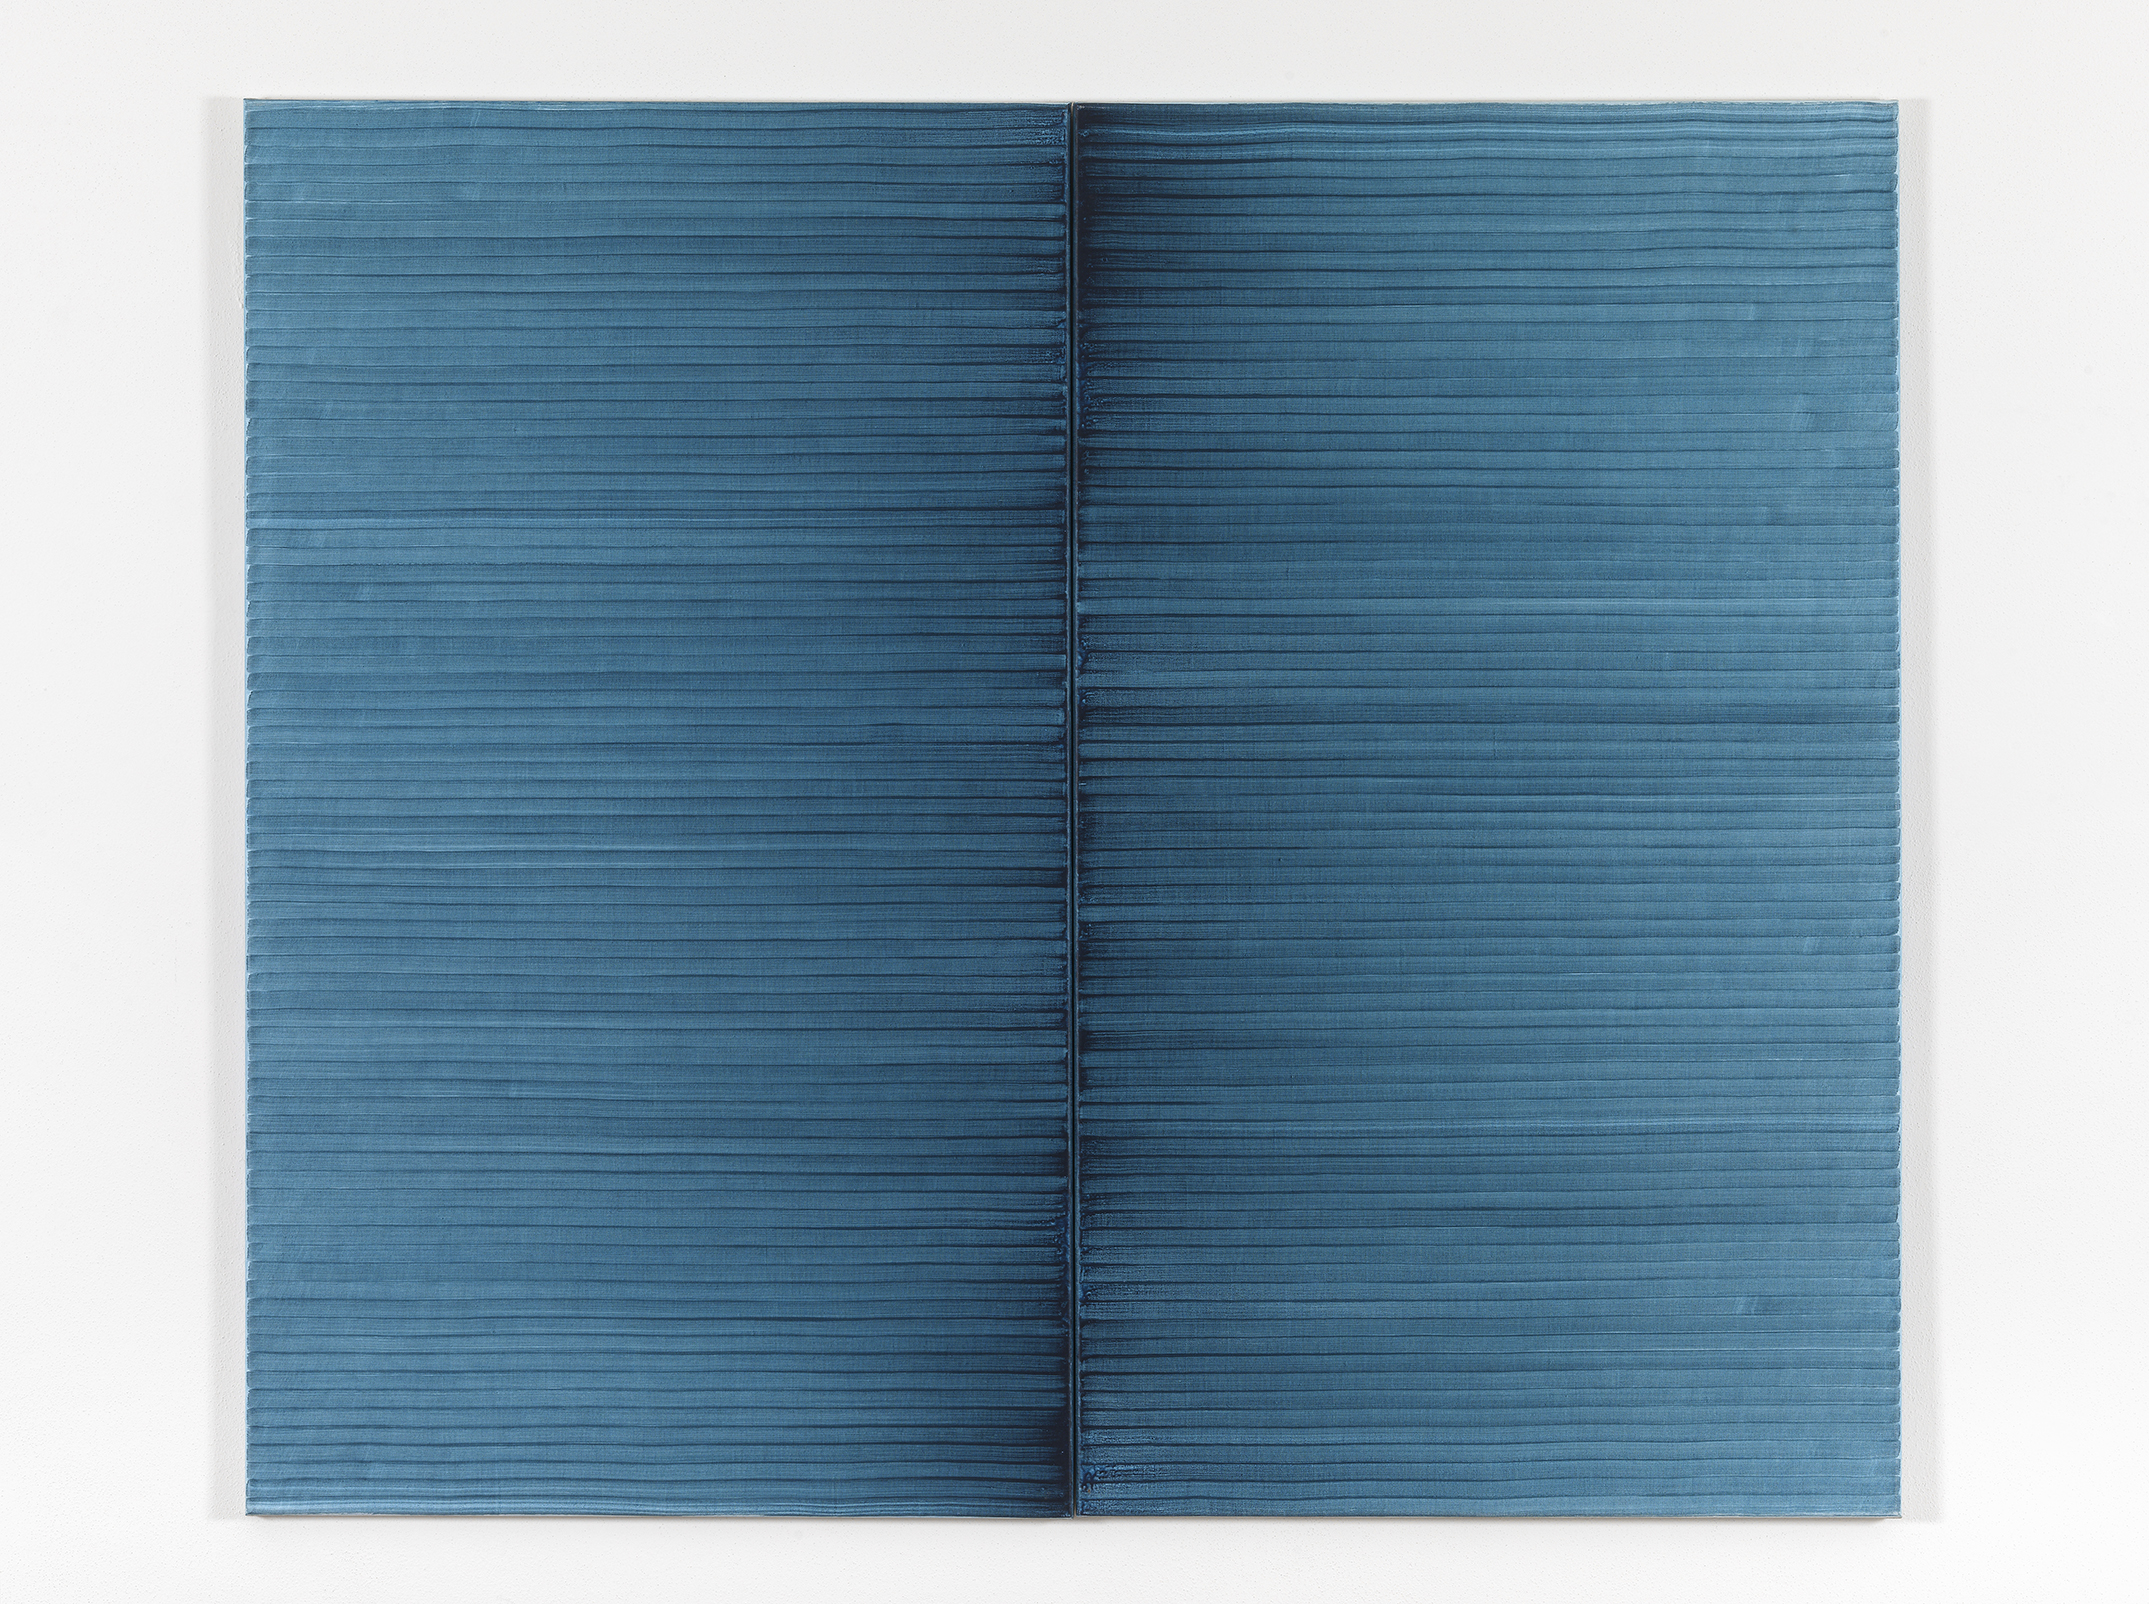 Radical Writings, Schrift-Atem-Zug, 21-8-88, acrylic on canvas, diptych, 120 x 70 cm each (120 x 140 cm overall), 1988